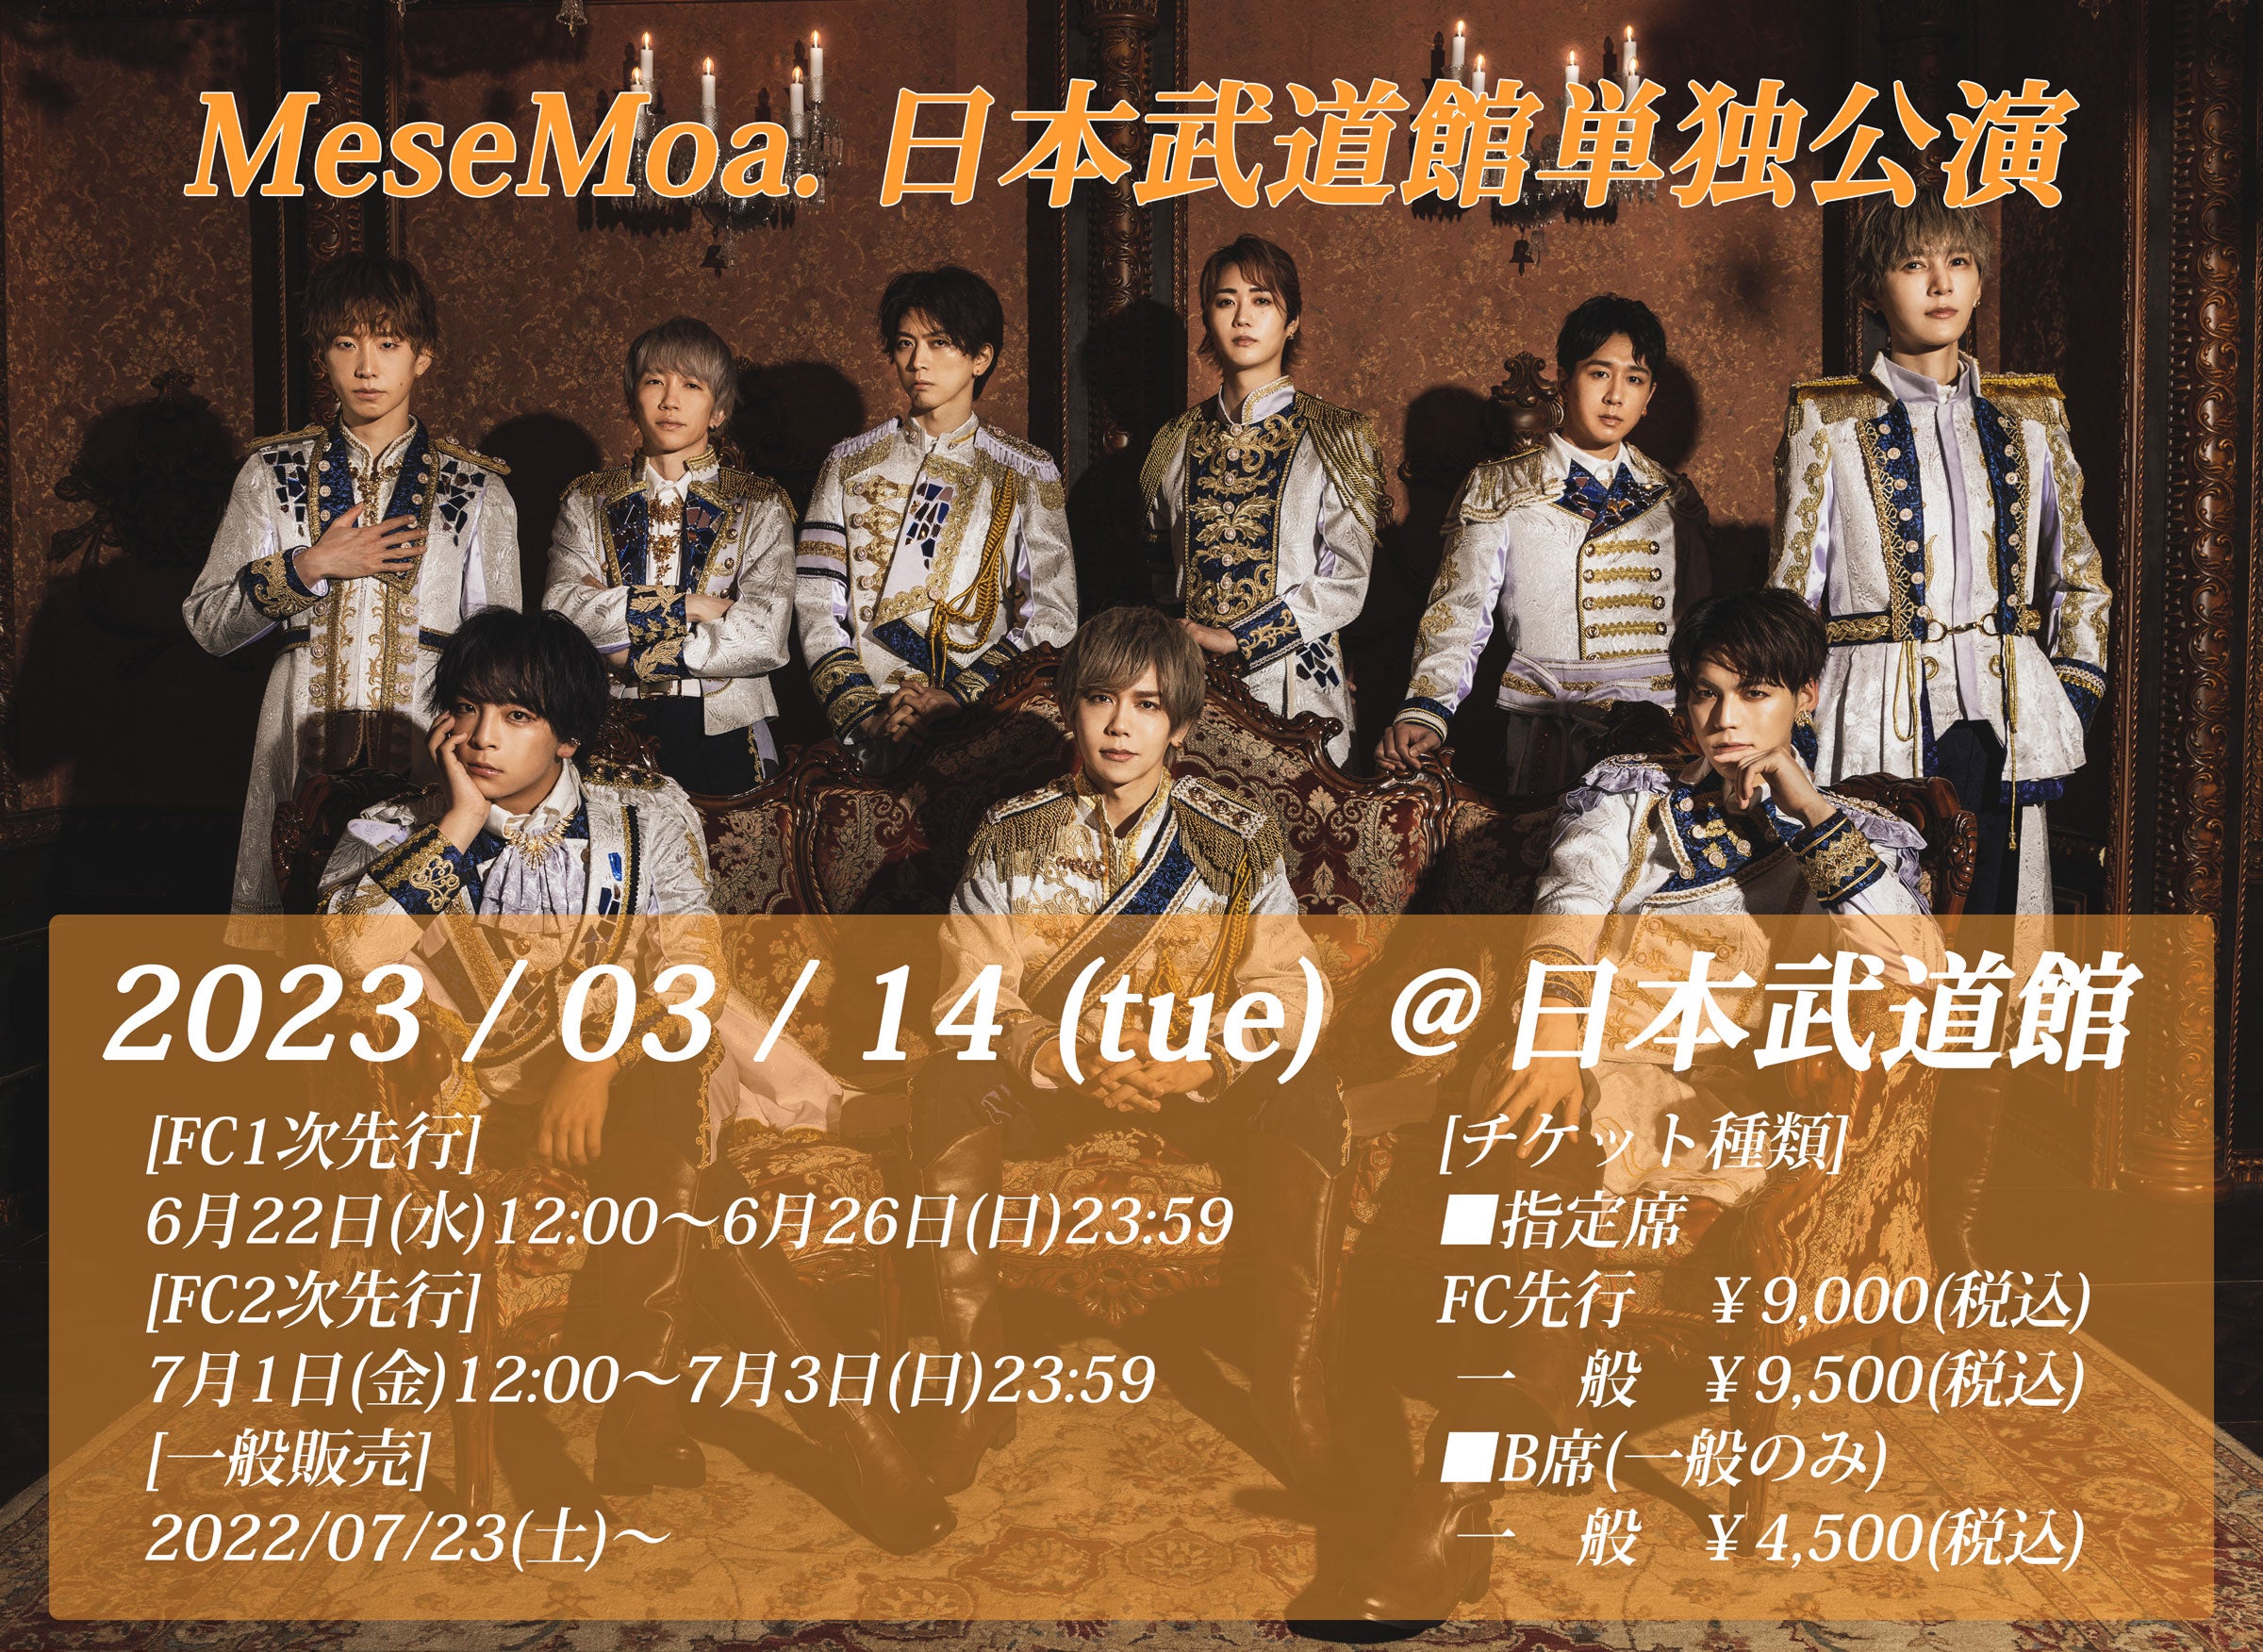 MeseMoa.日本武道館公演2023「Messa9e More」開催詳細 | MeseMoa.